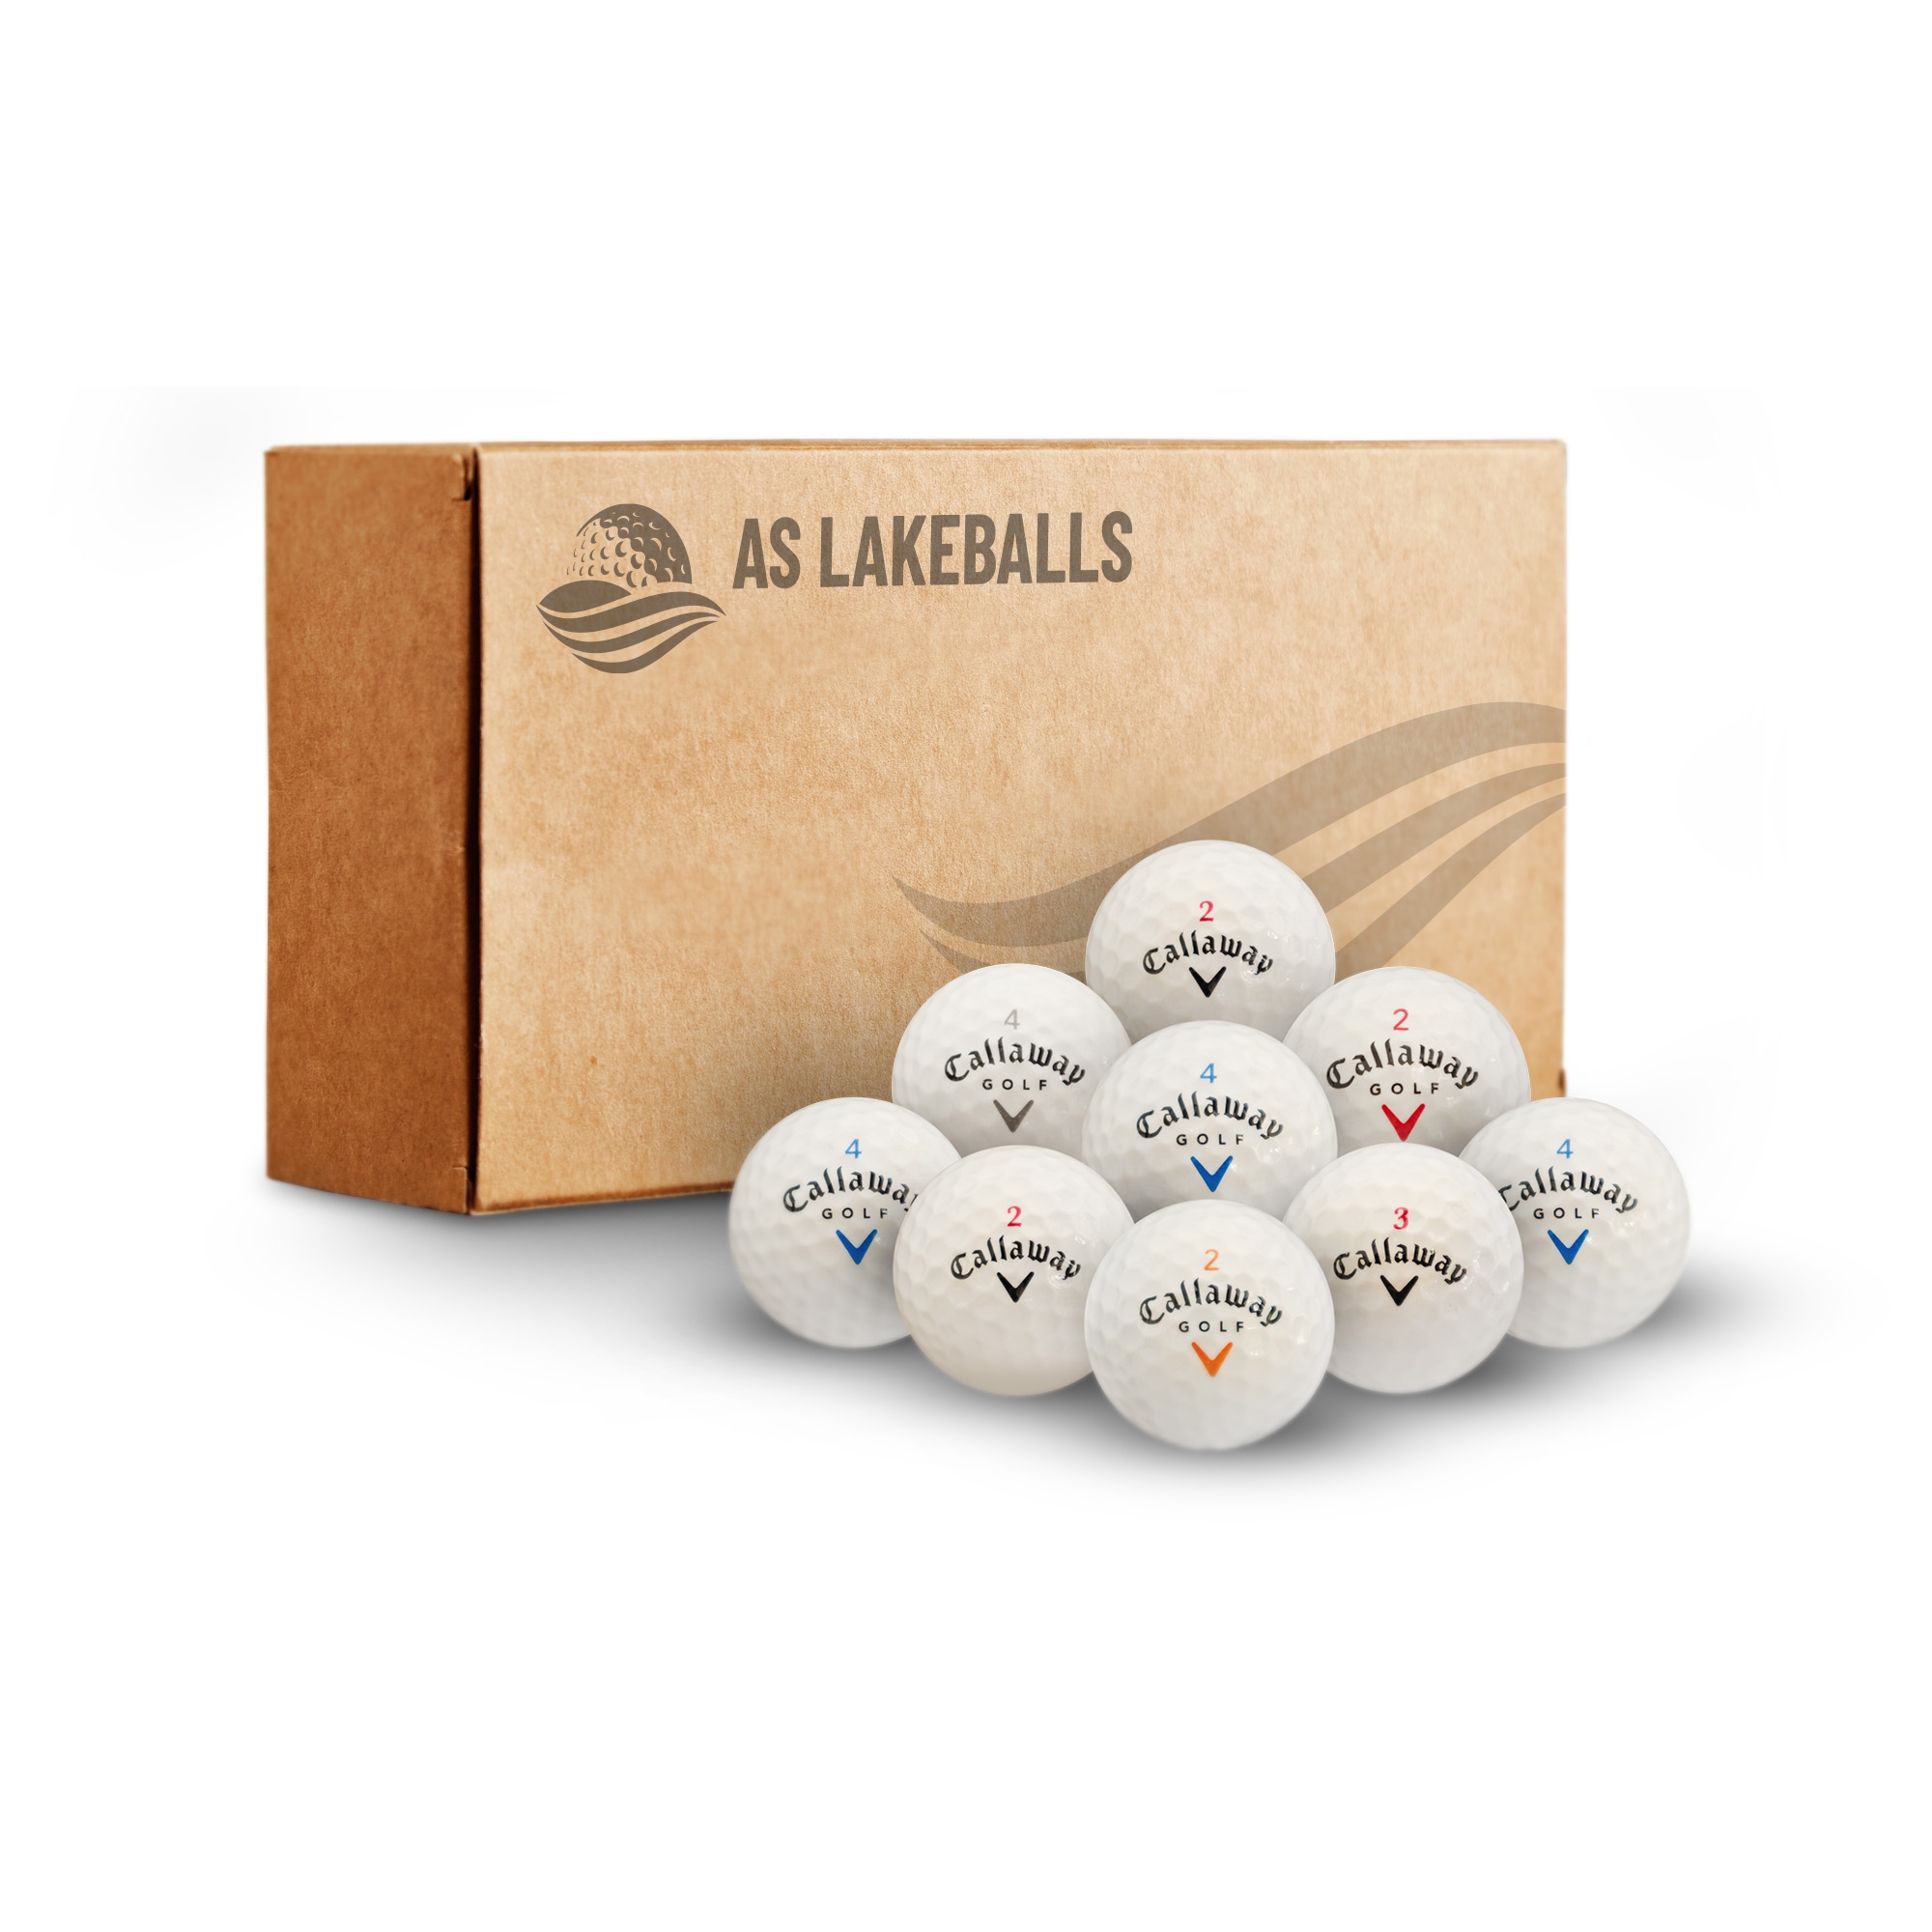 100 Callaway Mix AA bei AS Lakeballs günstig kaufen